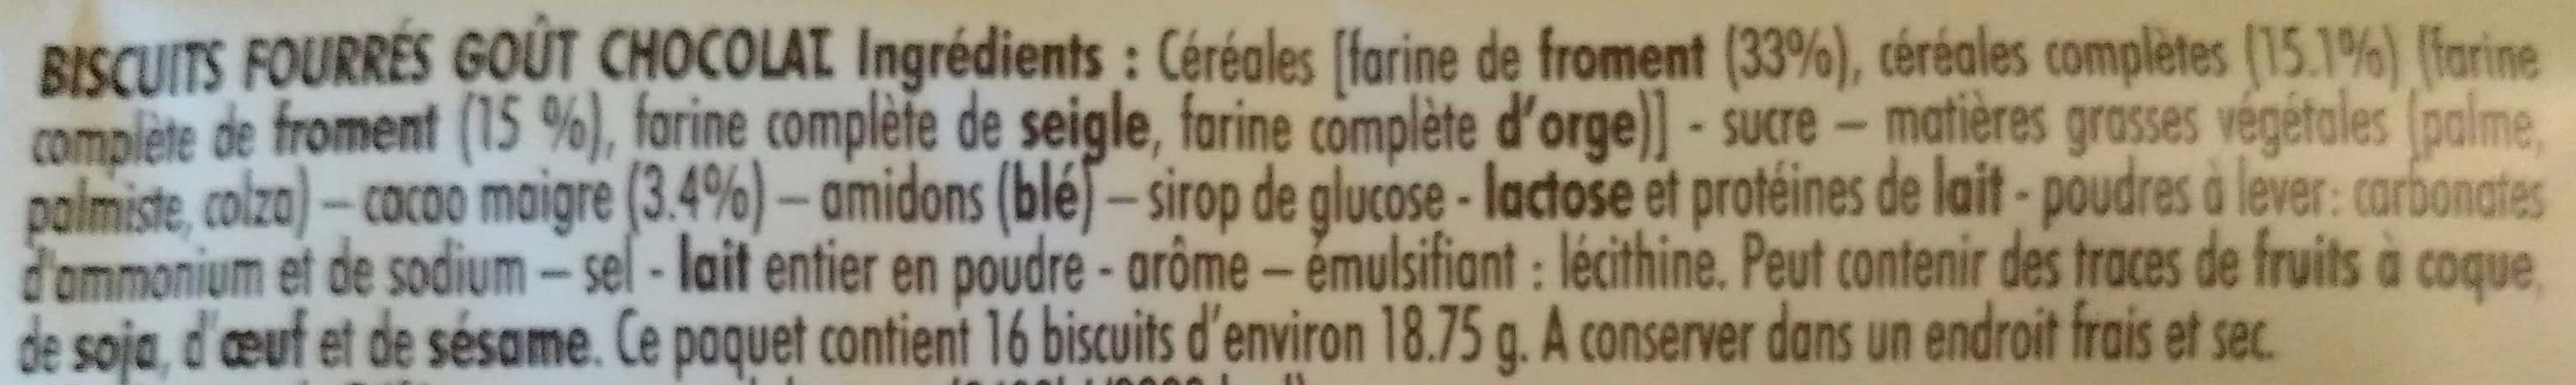 Biscuits Goût Chocolat - Ingredienti - fr